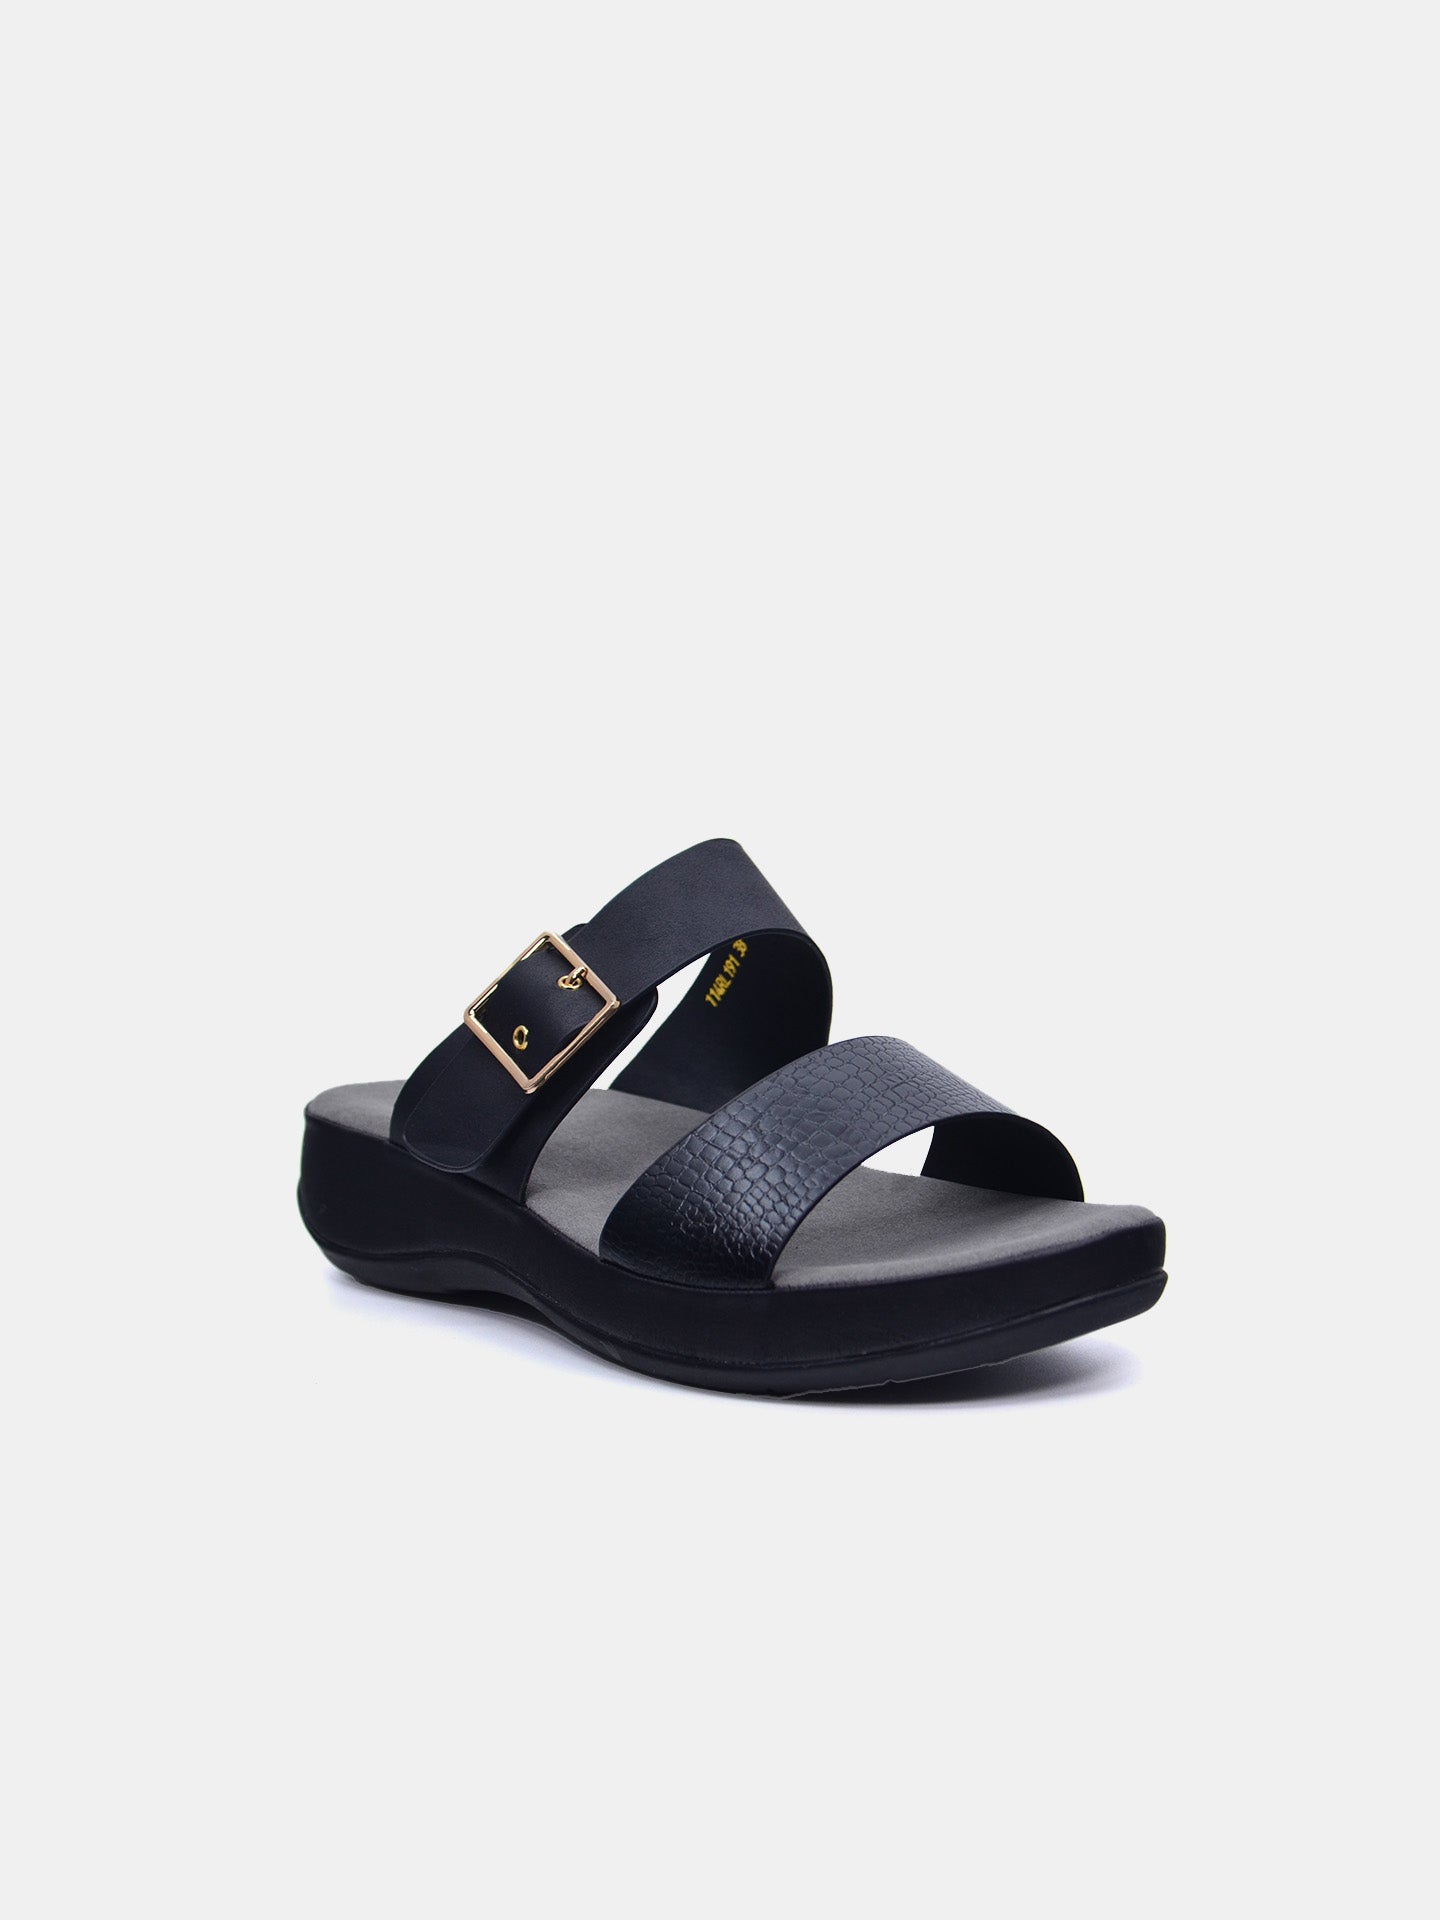 Michelle Morgan 114RL191 Women's Flat Sandals #color_Black